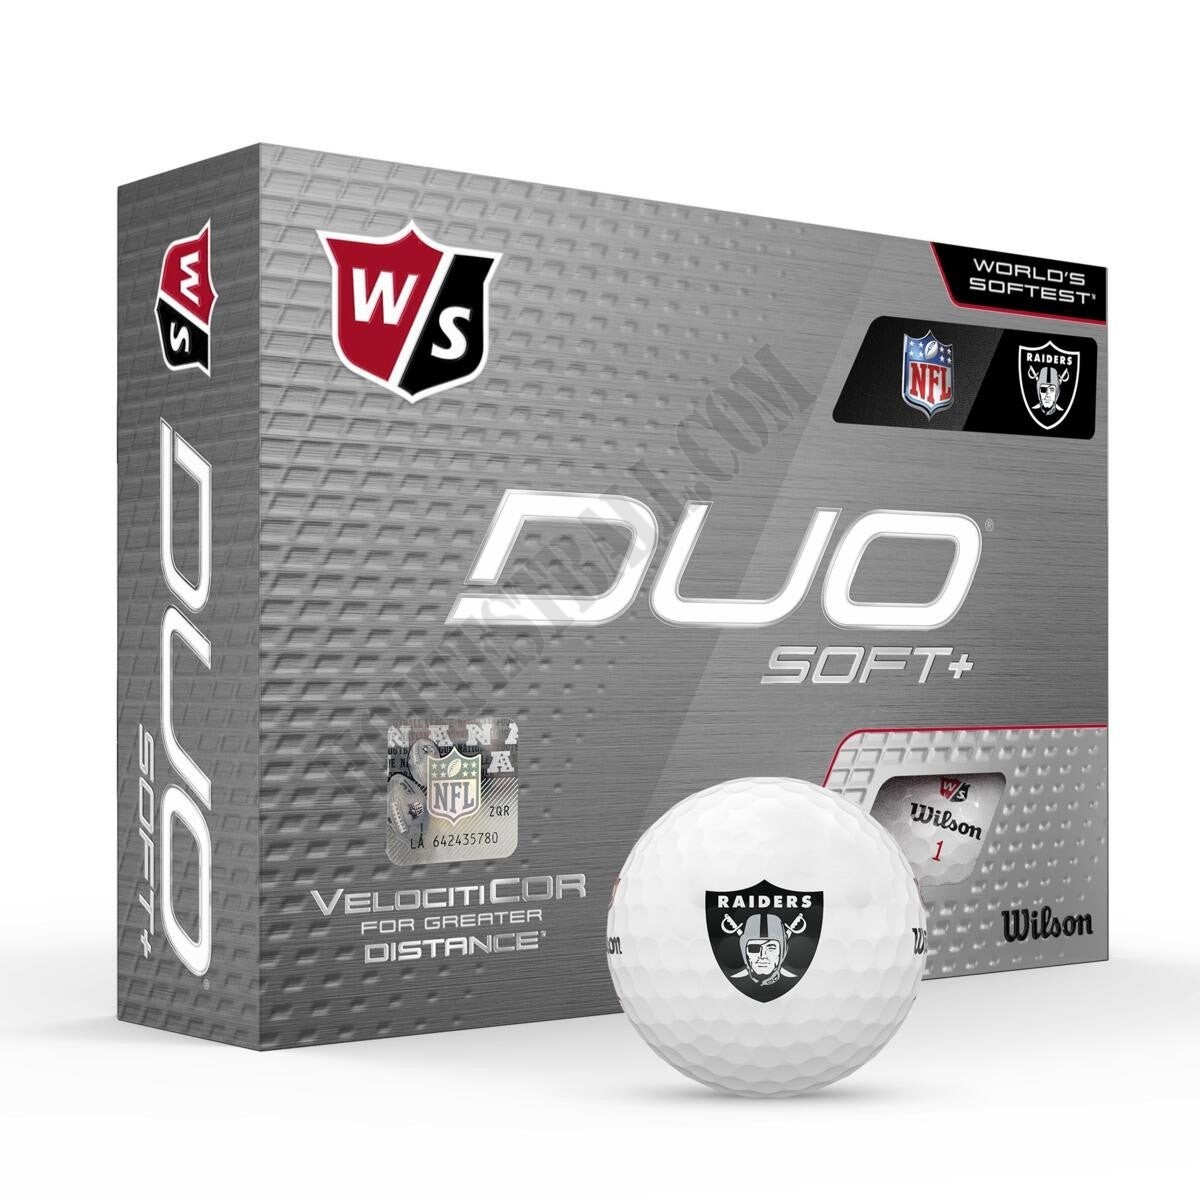 Duo Soft+ NFL Golf Balls - Las Vegas Raiders - Wilson Discount Store - Duo Soft+ NFL Golf Balls - Las Vegas Raiders - Wilson Discount Store